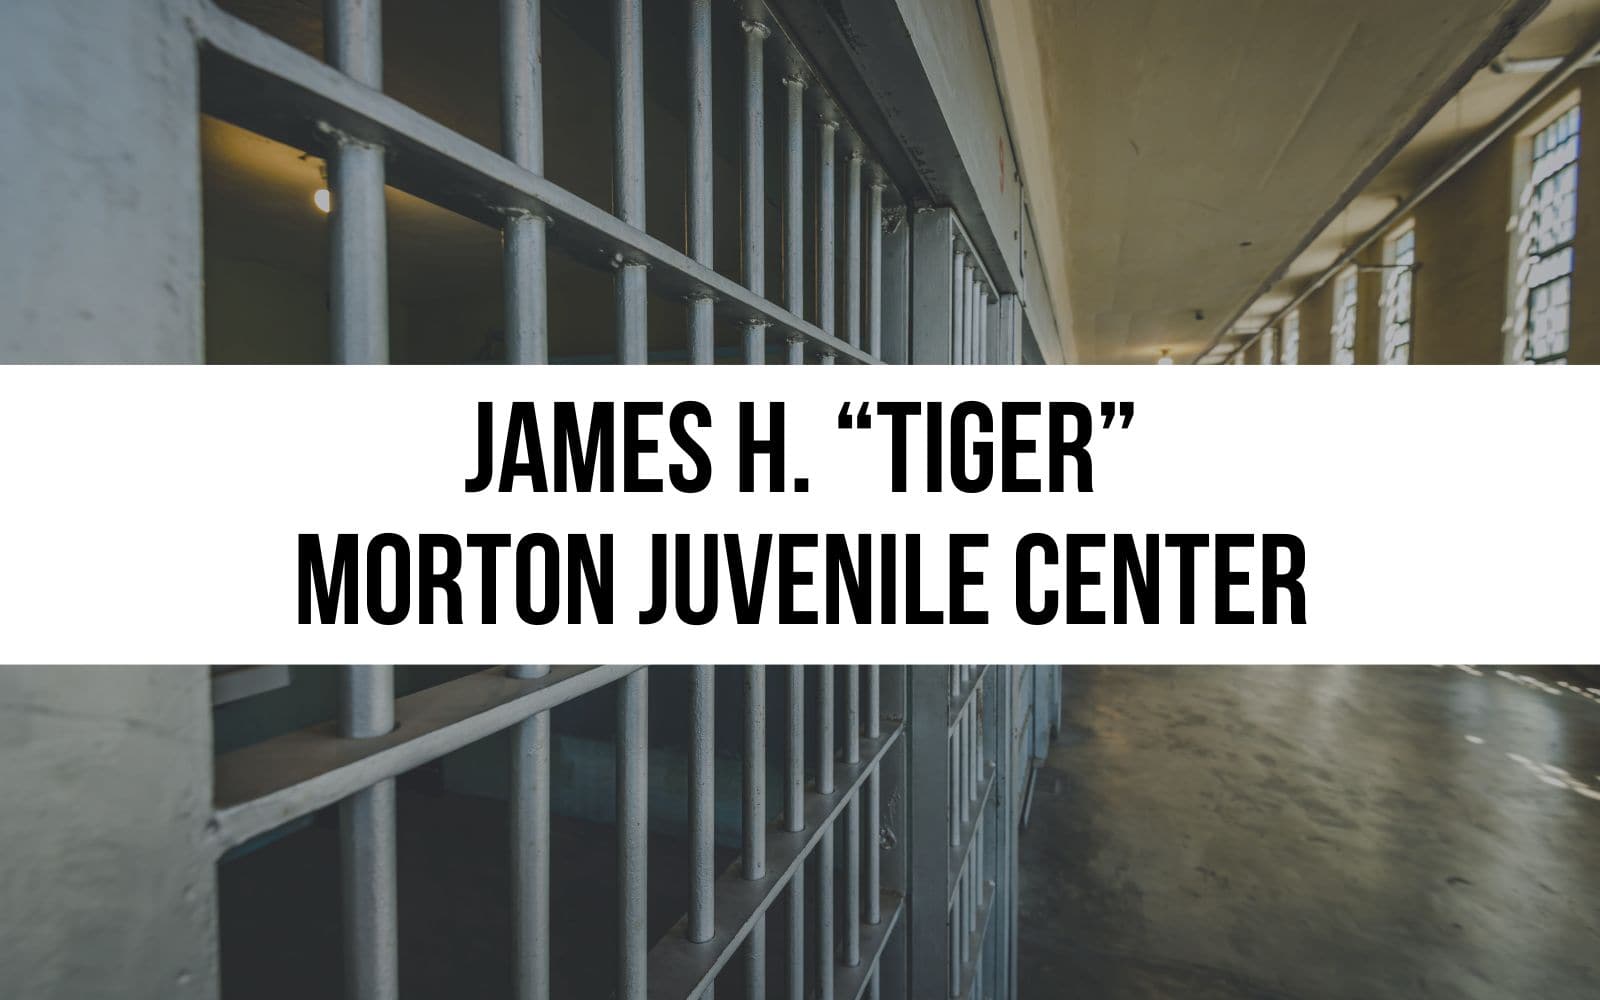 James H. “Tiger” Morton Juvenile Center